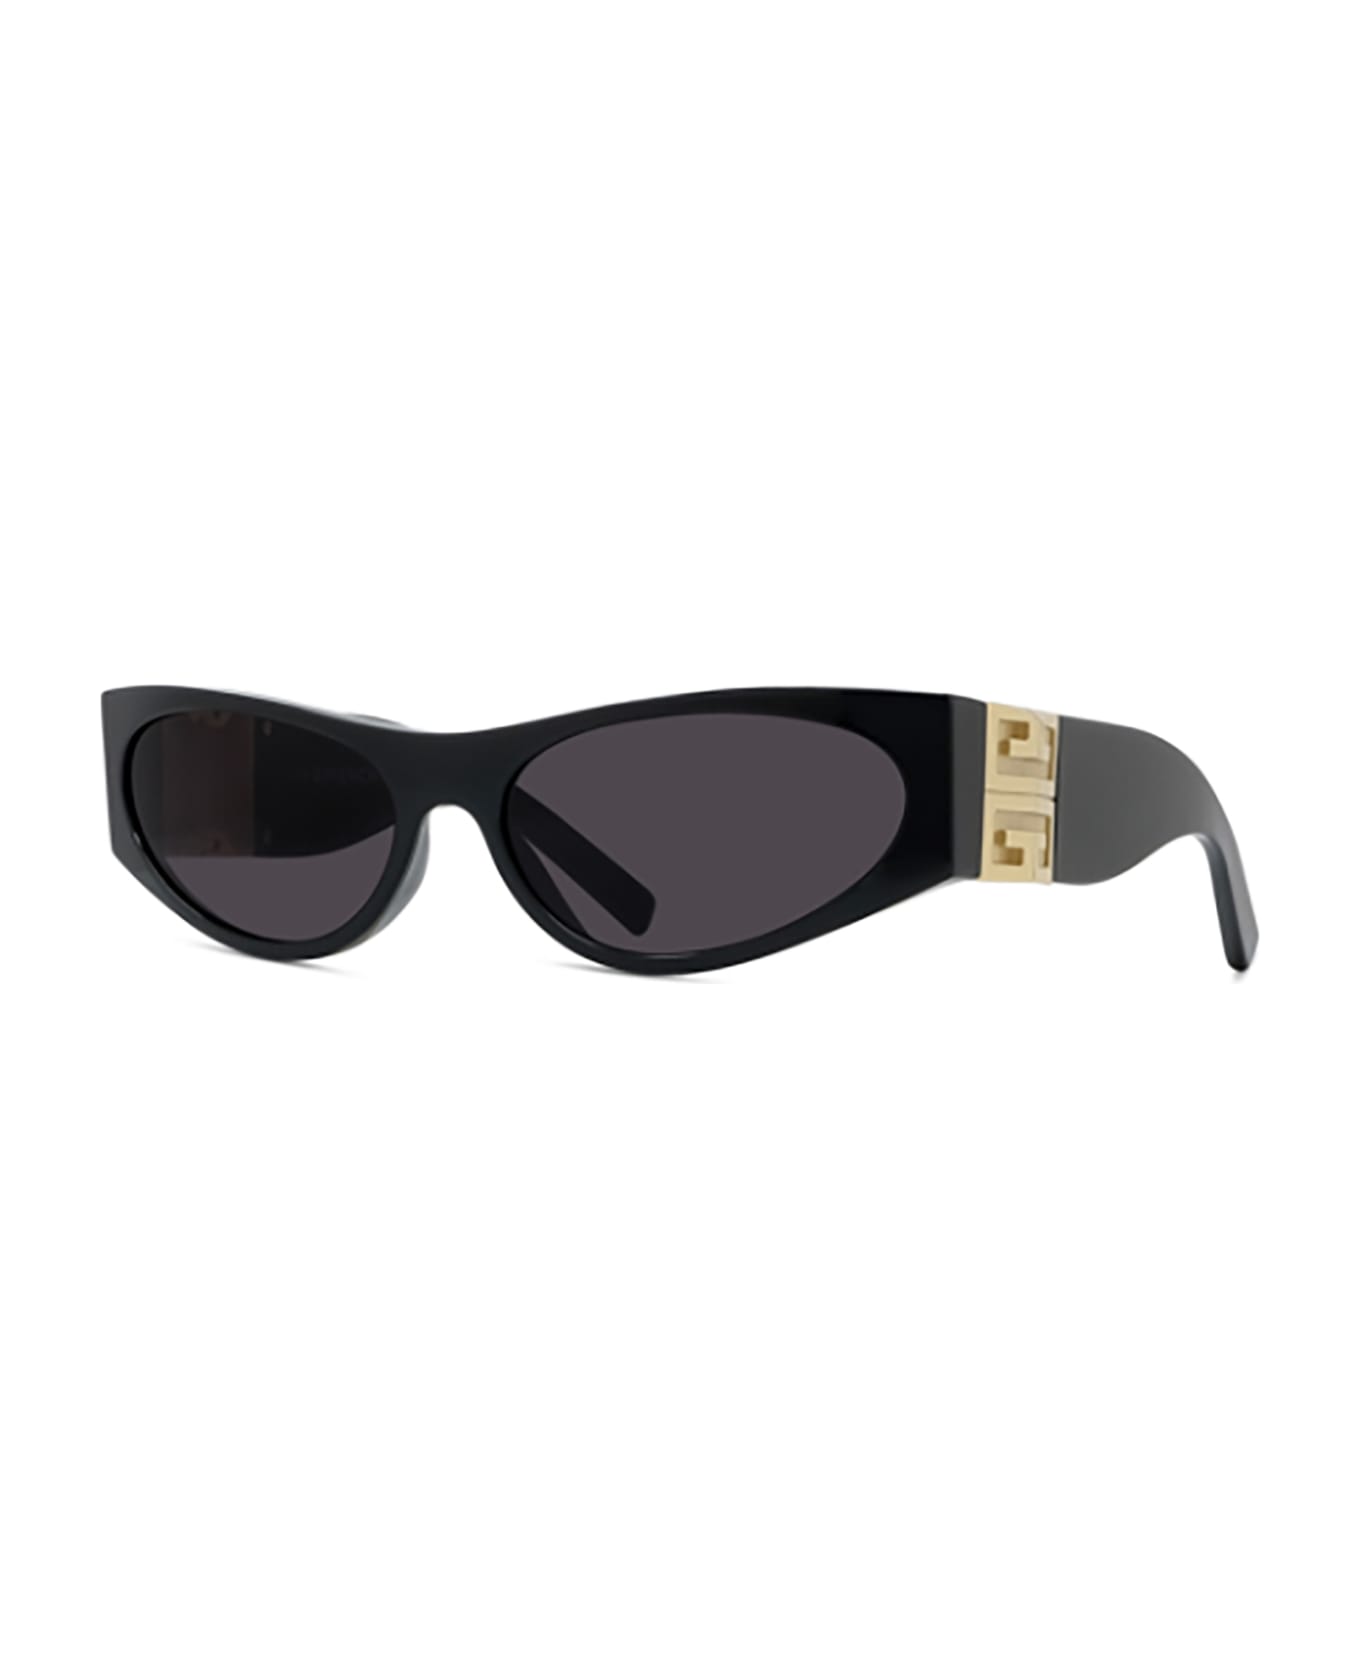 Givenchy Eyewear GV40055I Sunglasses - A